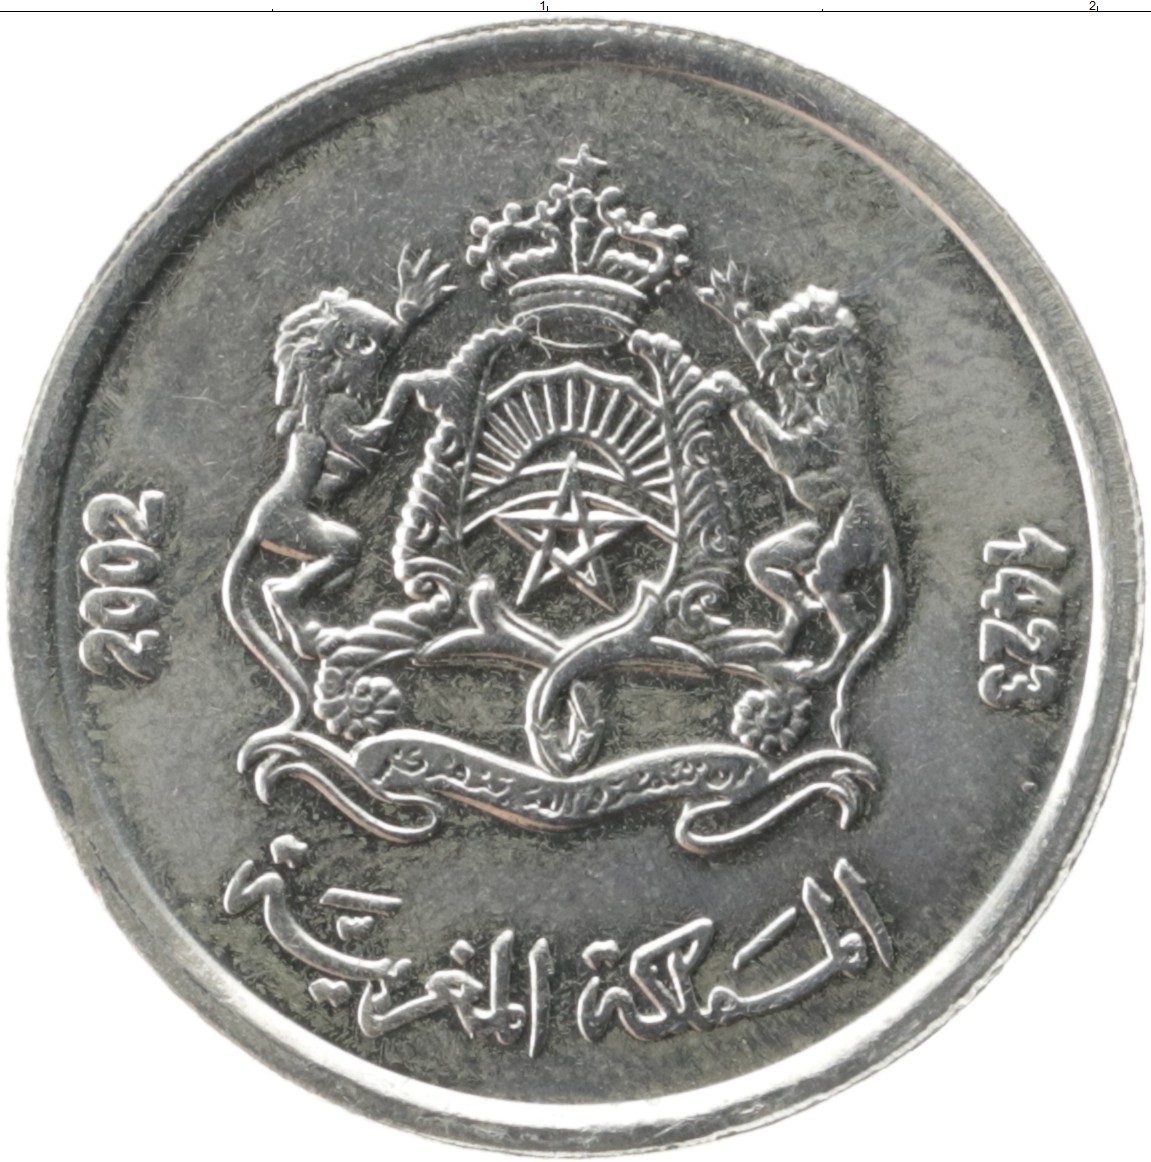 3 дирхама. 1/2 Дирхама Марокко. 2 Дирхама монета. Монета Марокко 1/2 дирхама 2002. Три дирхама монета.